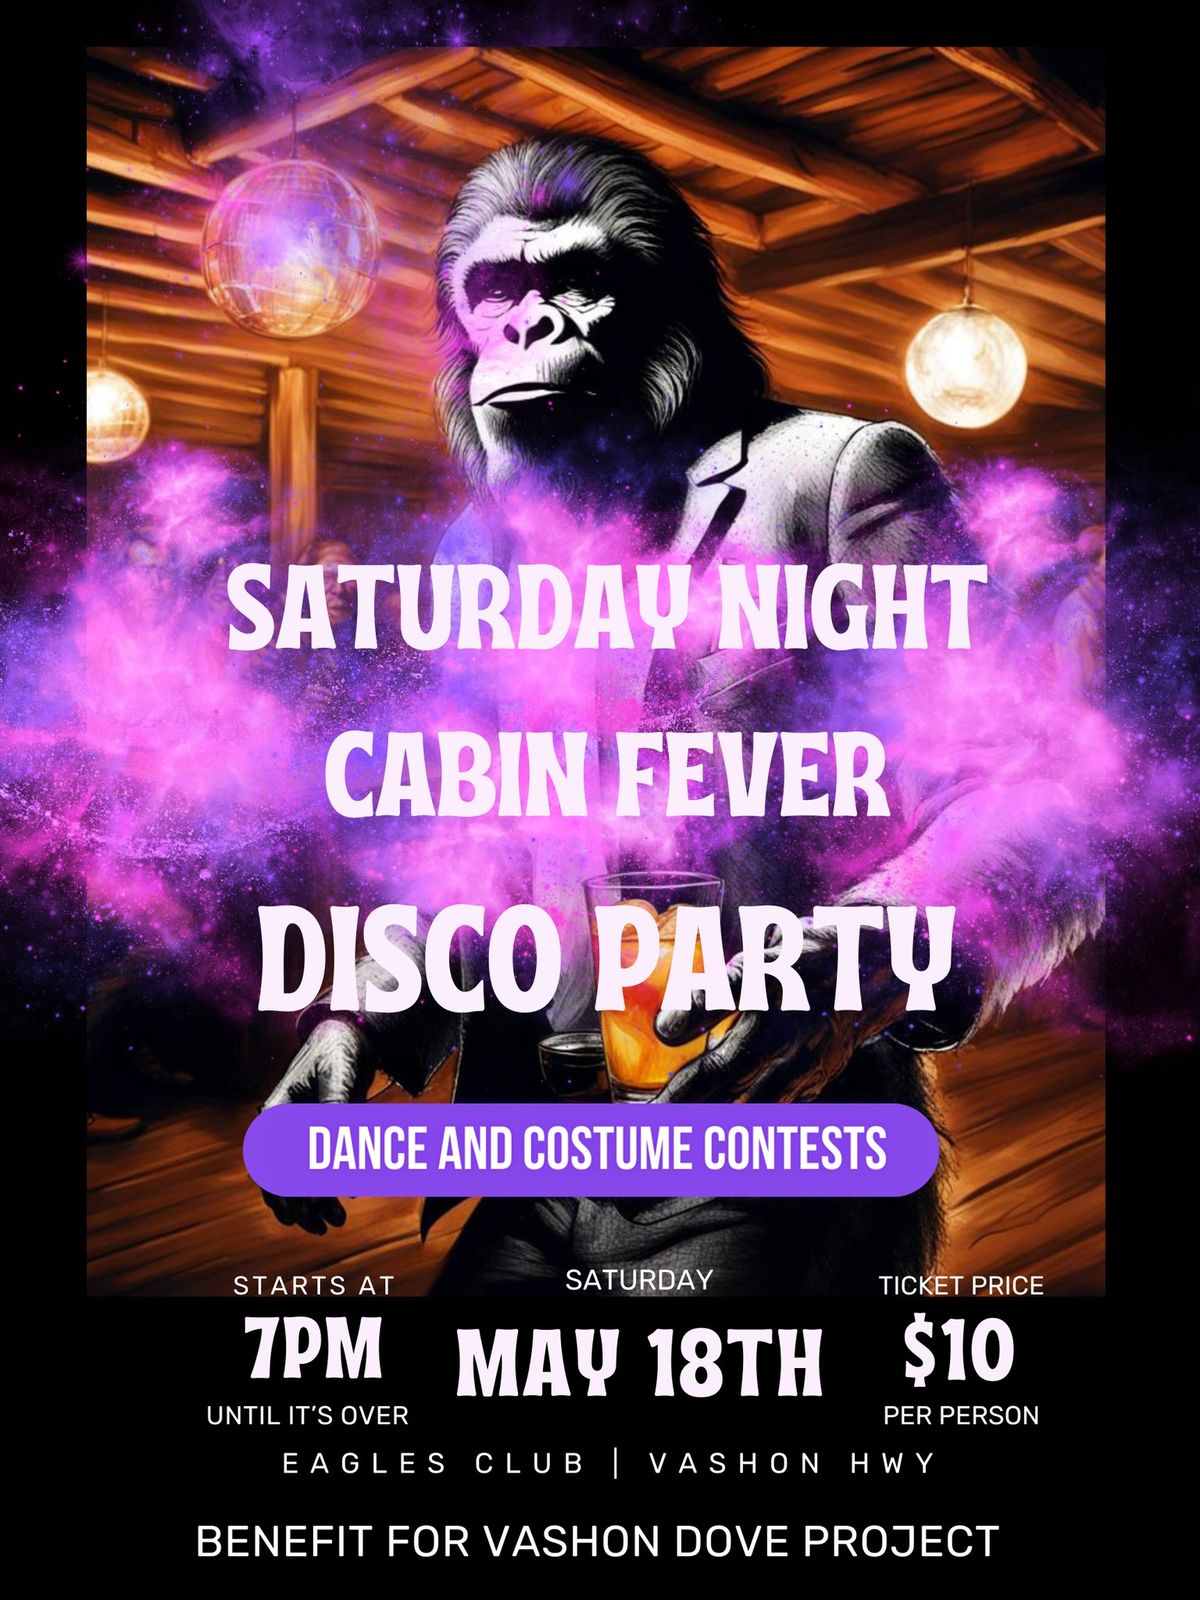 Saturday Night Cabin Fever Disco Party Benefit for the Vashon Dove Project